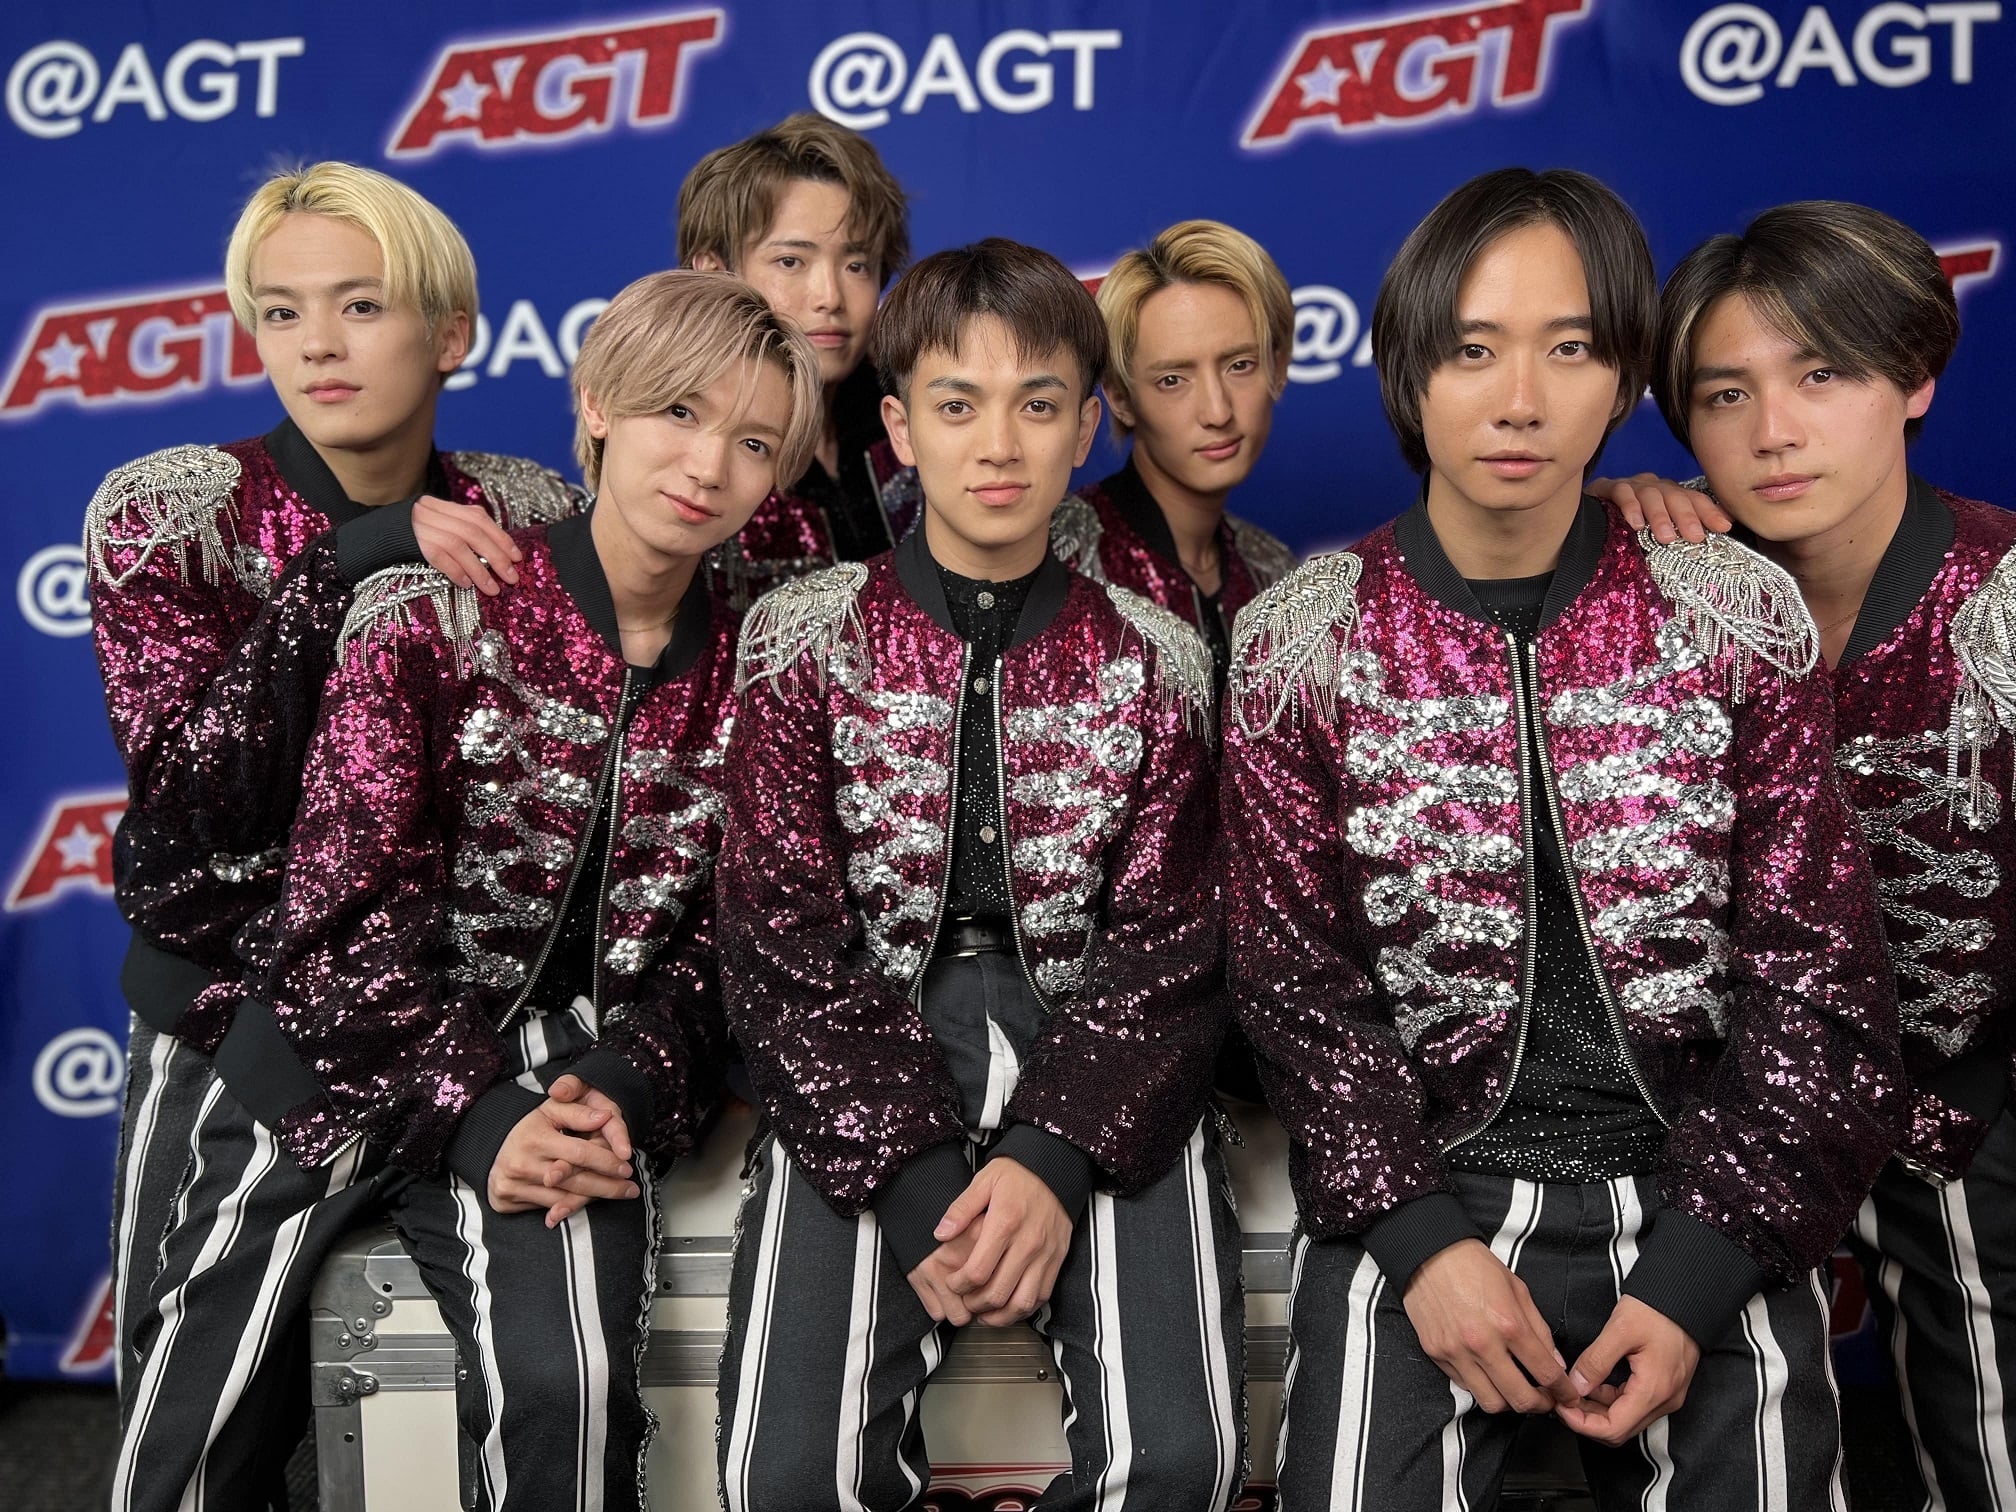 TRAVIS JAPAN Dance Group Lights Up America’s Got Talent